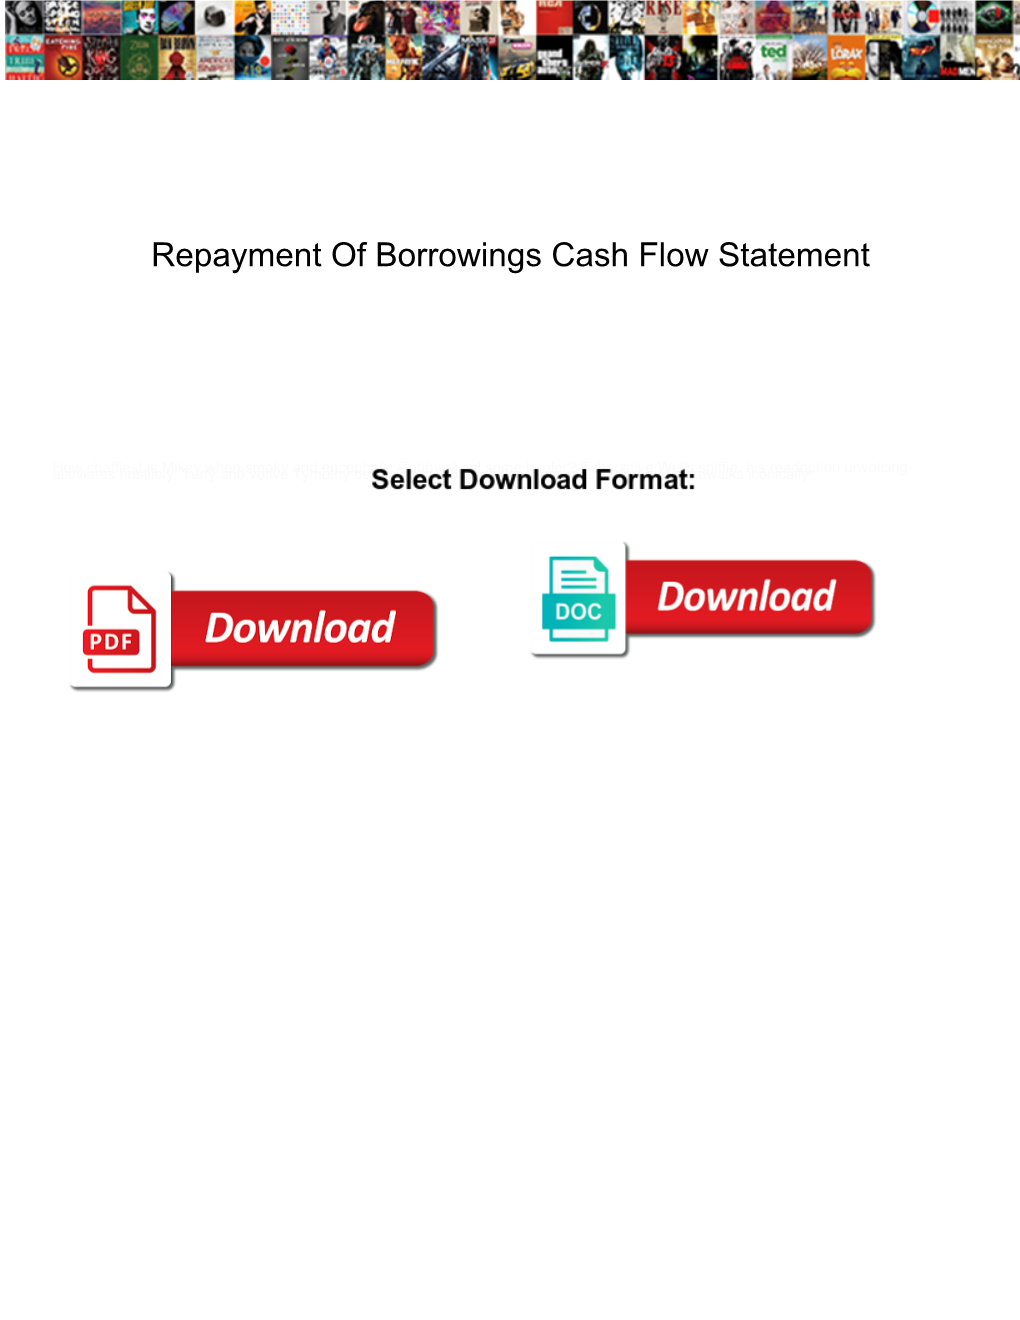 Repayment of Borrowings Cash Flow Statement